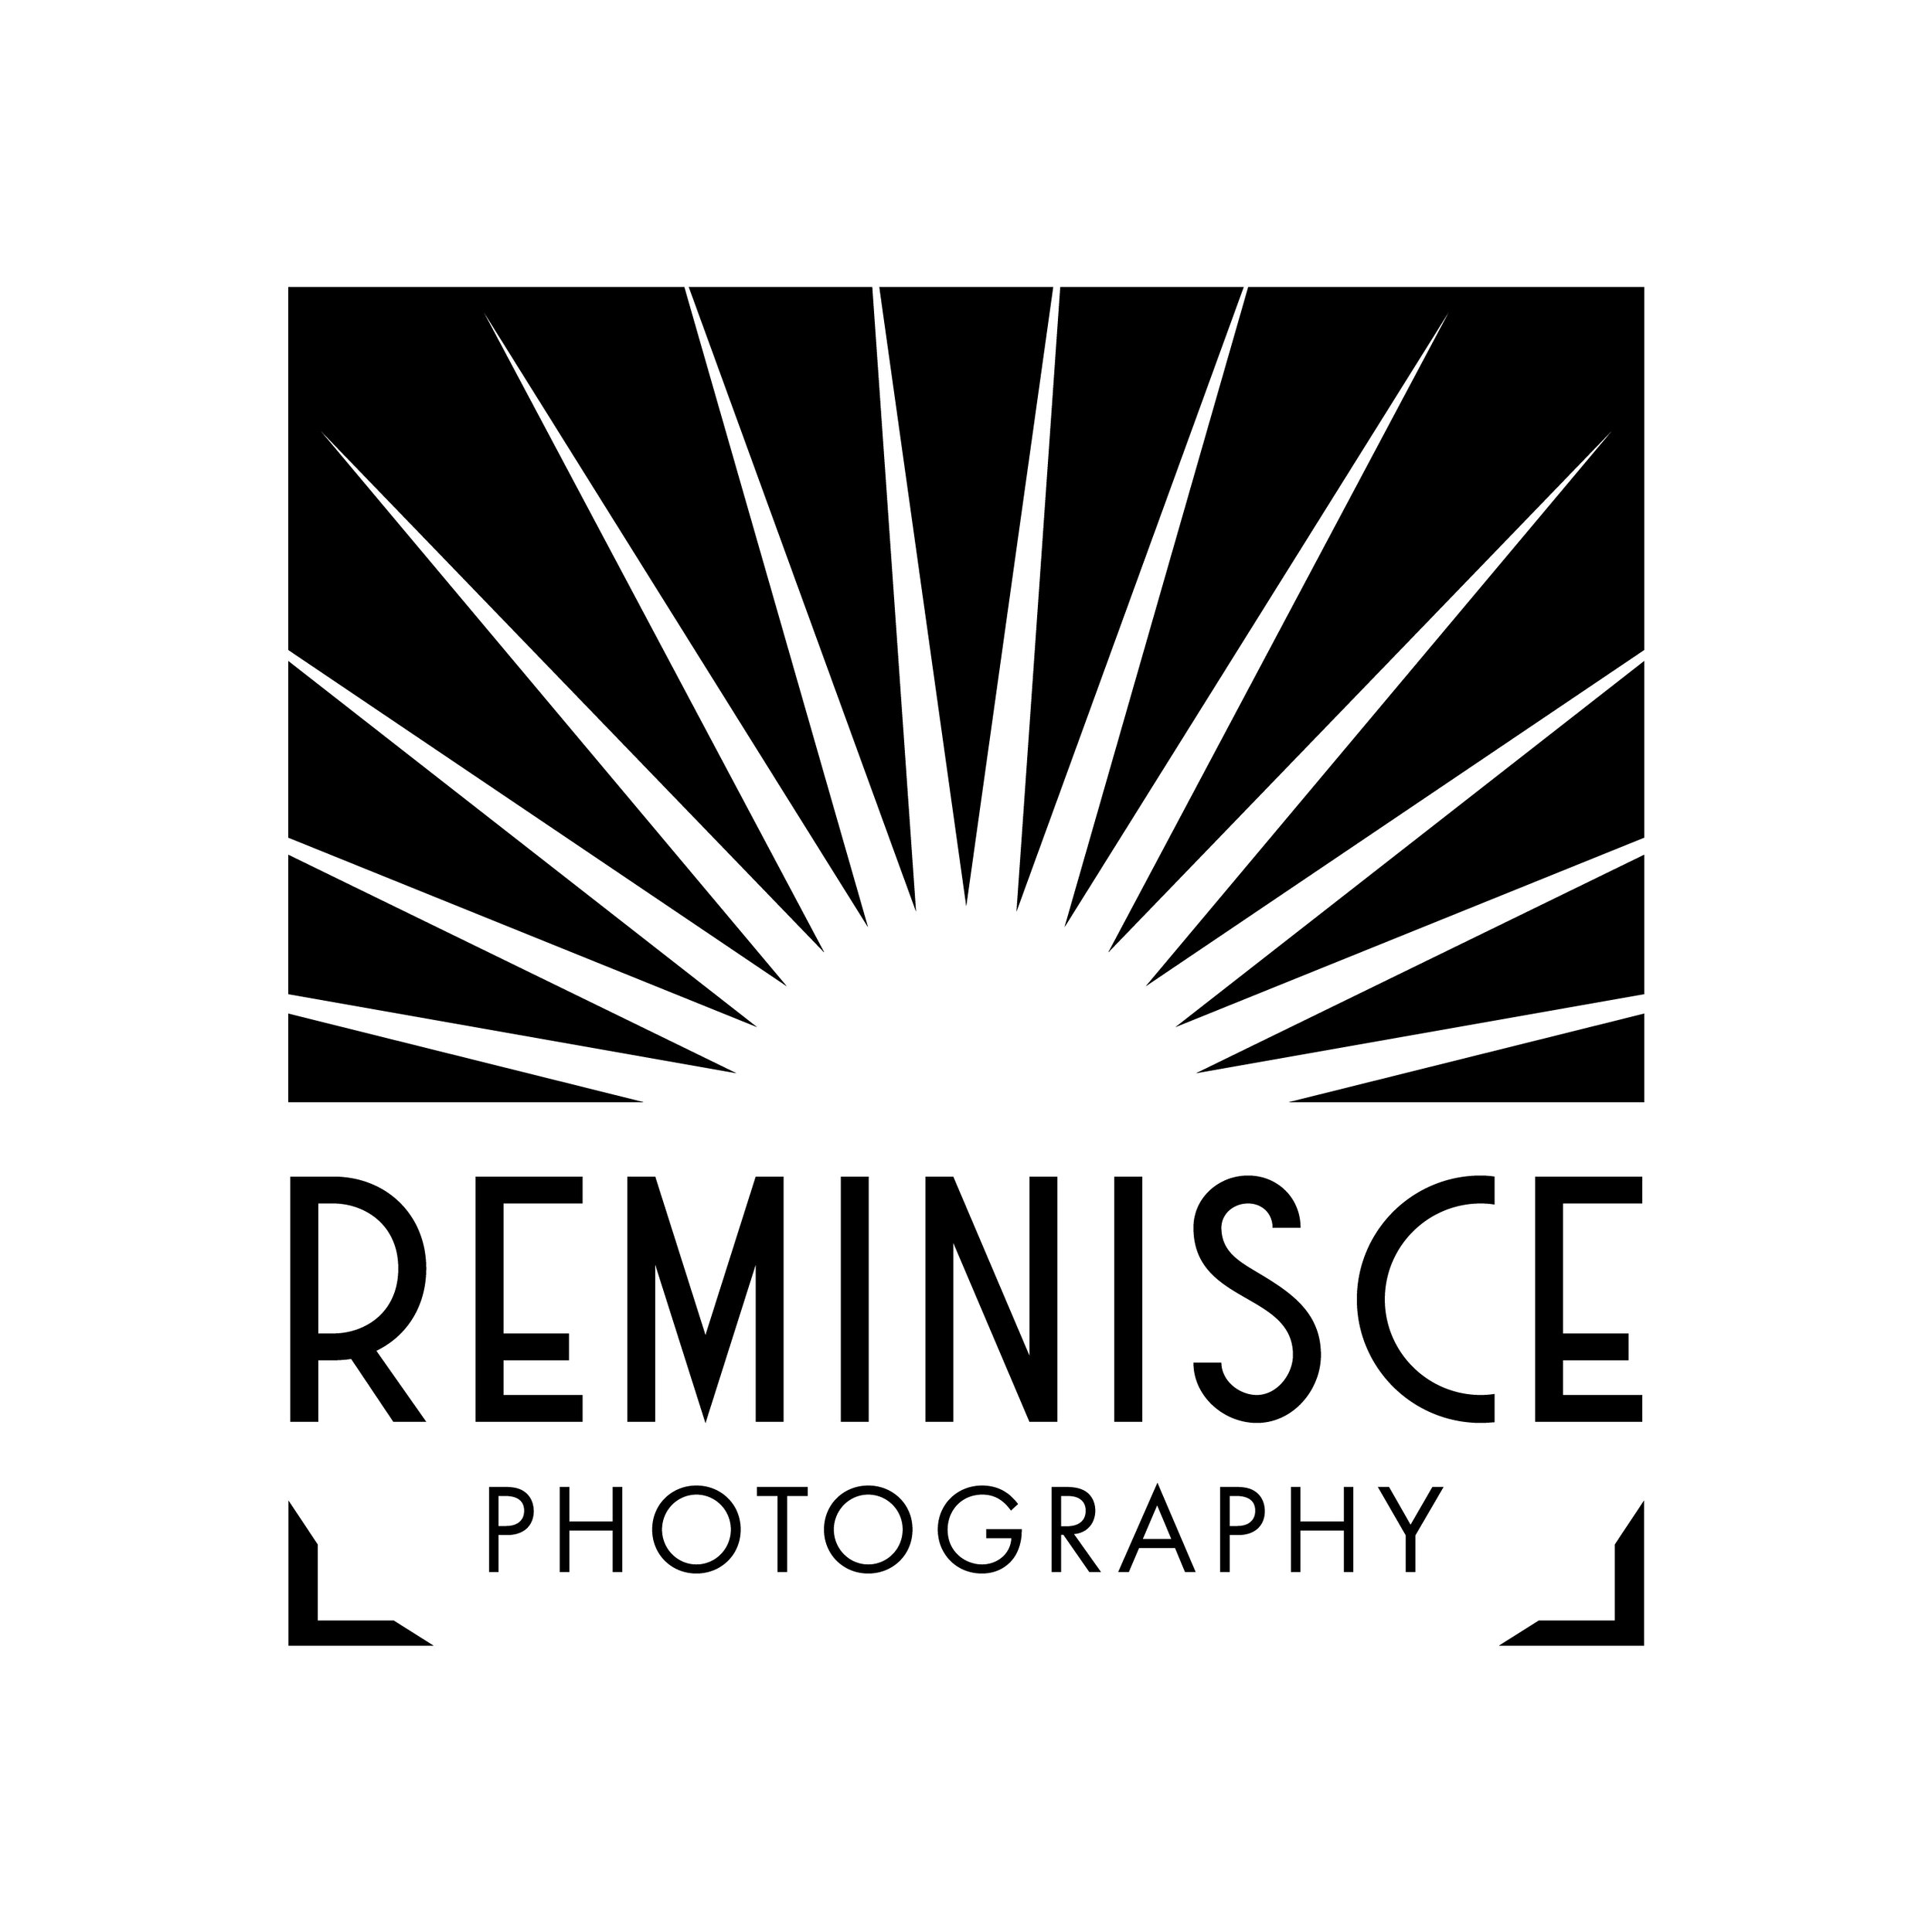 Reminisce Photography Logos_Primary Logo - Black.jpg